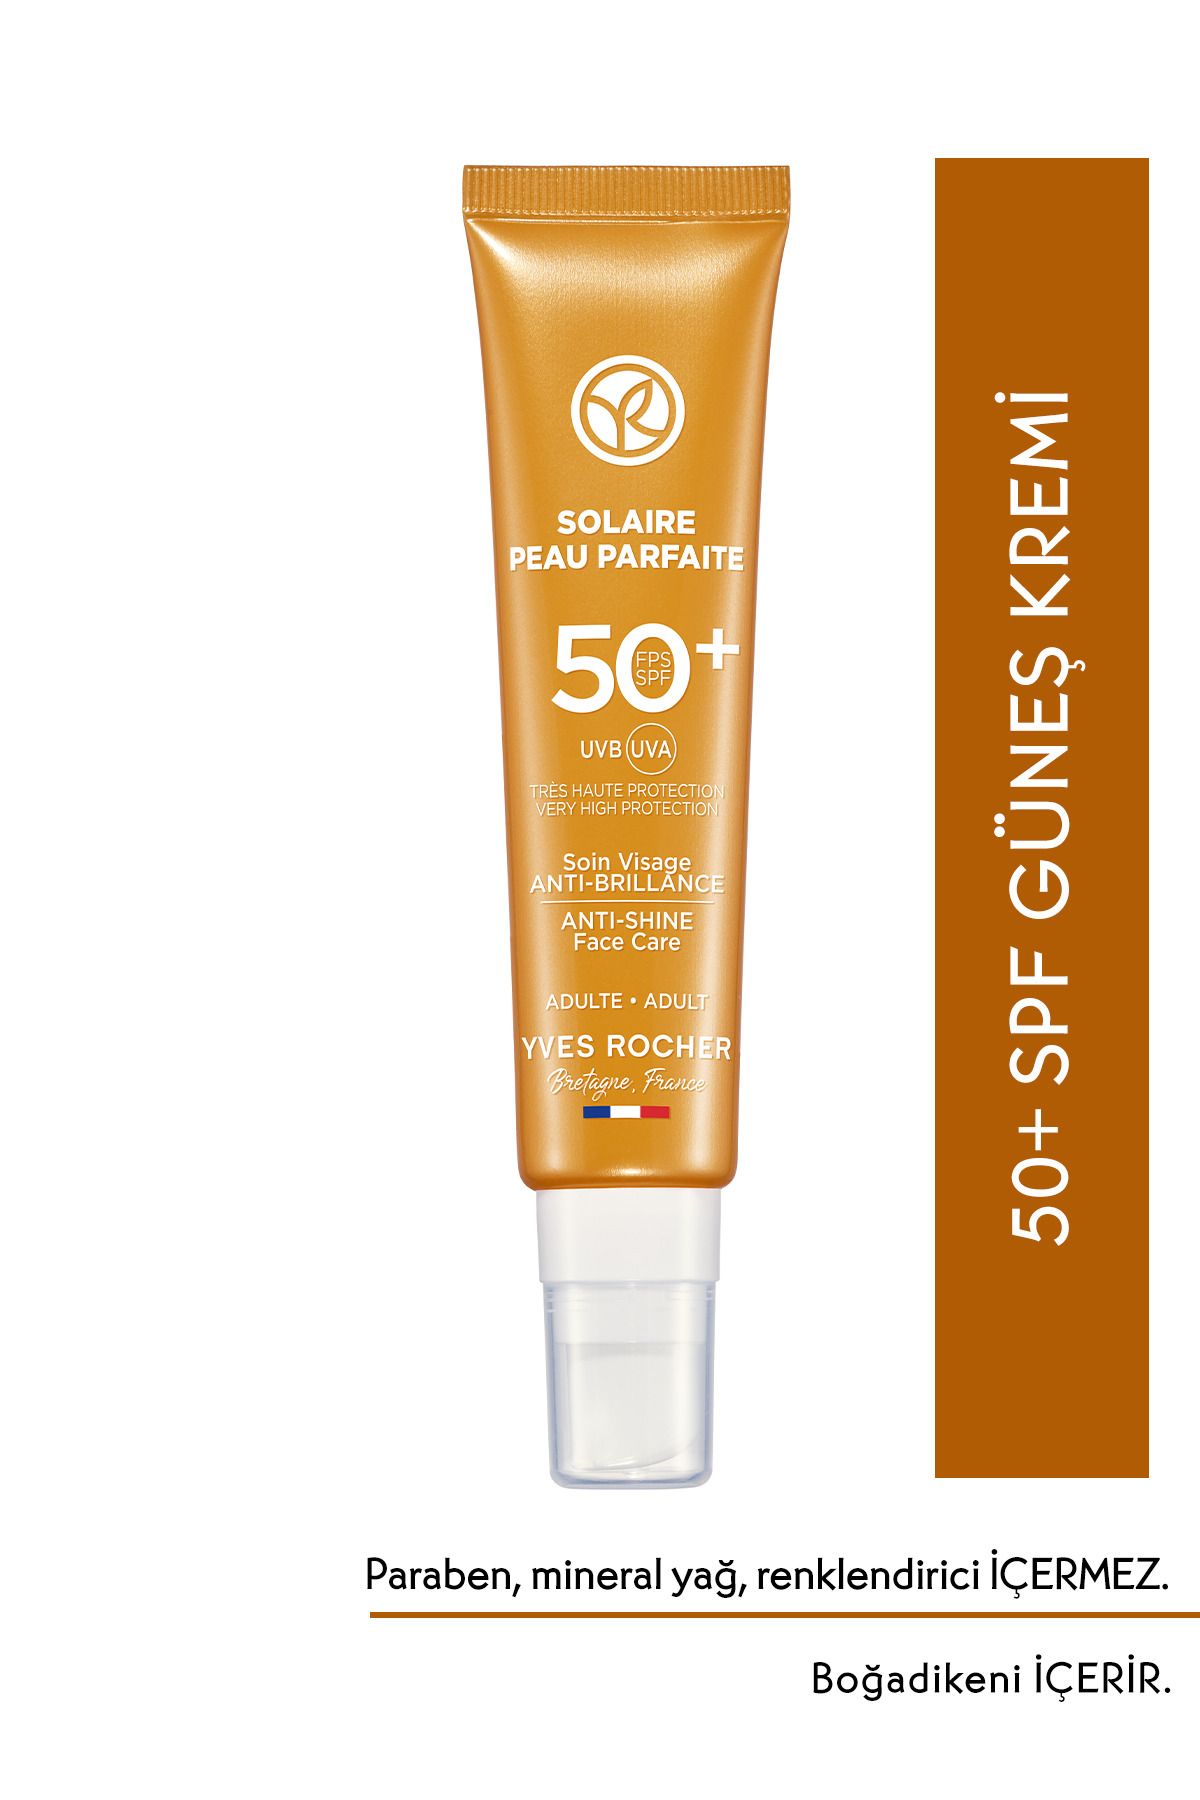 Yves Rocher Yüz Güneş Kremi - SPF 50+ - Parlama Karşıtı / Solaire Peau Parfaite-40 ml